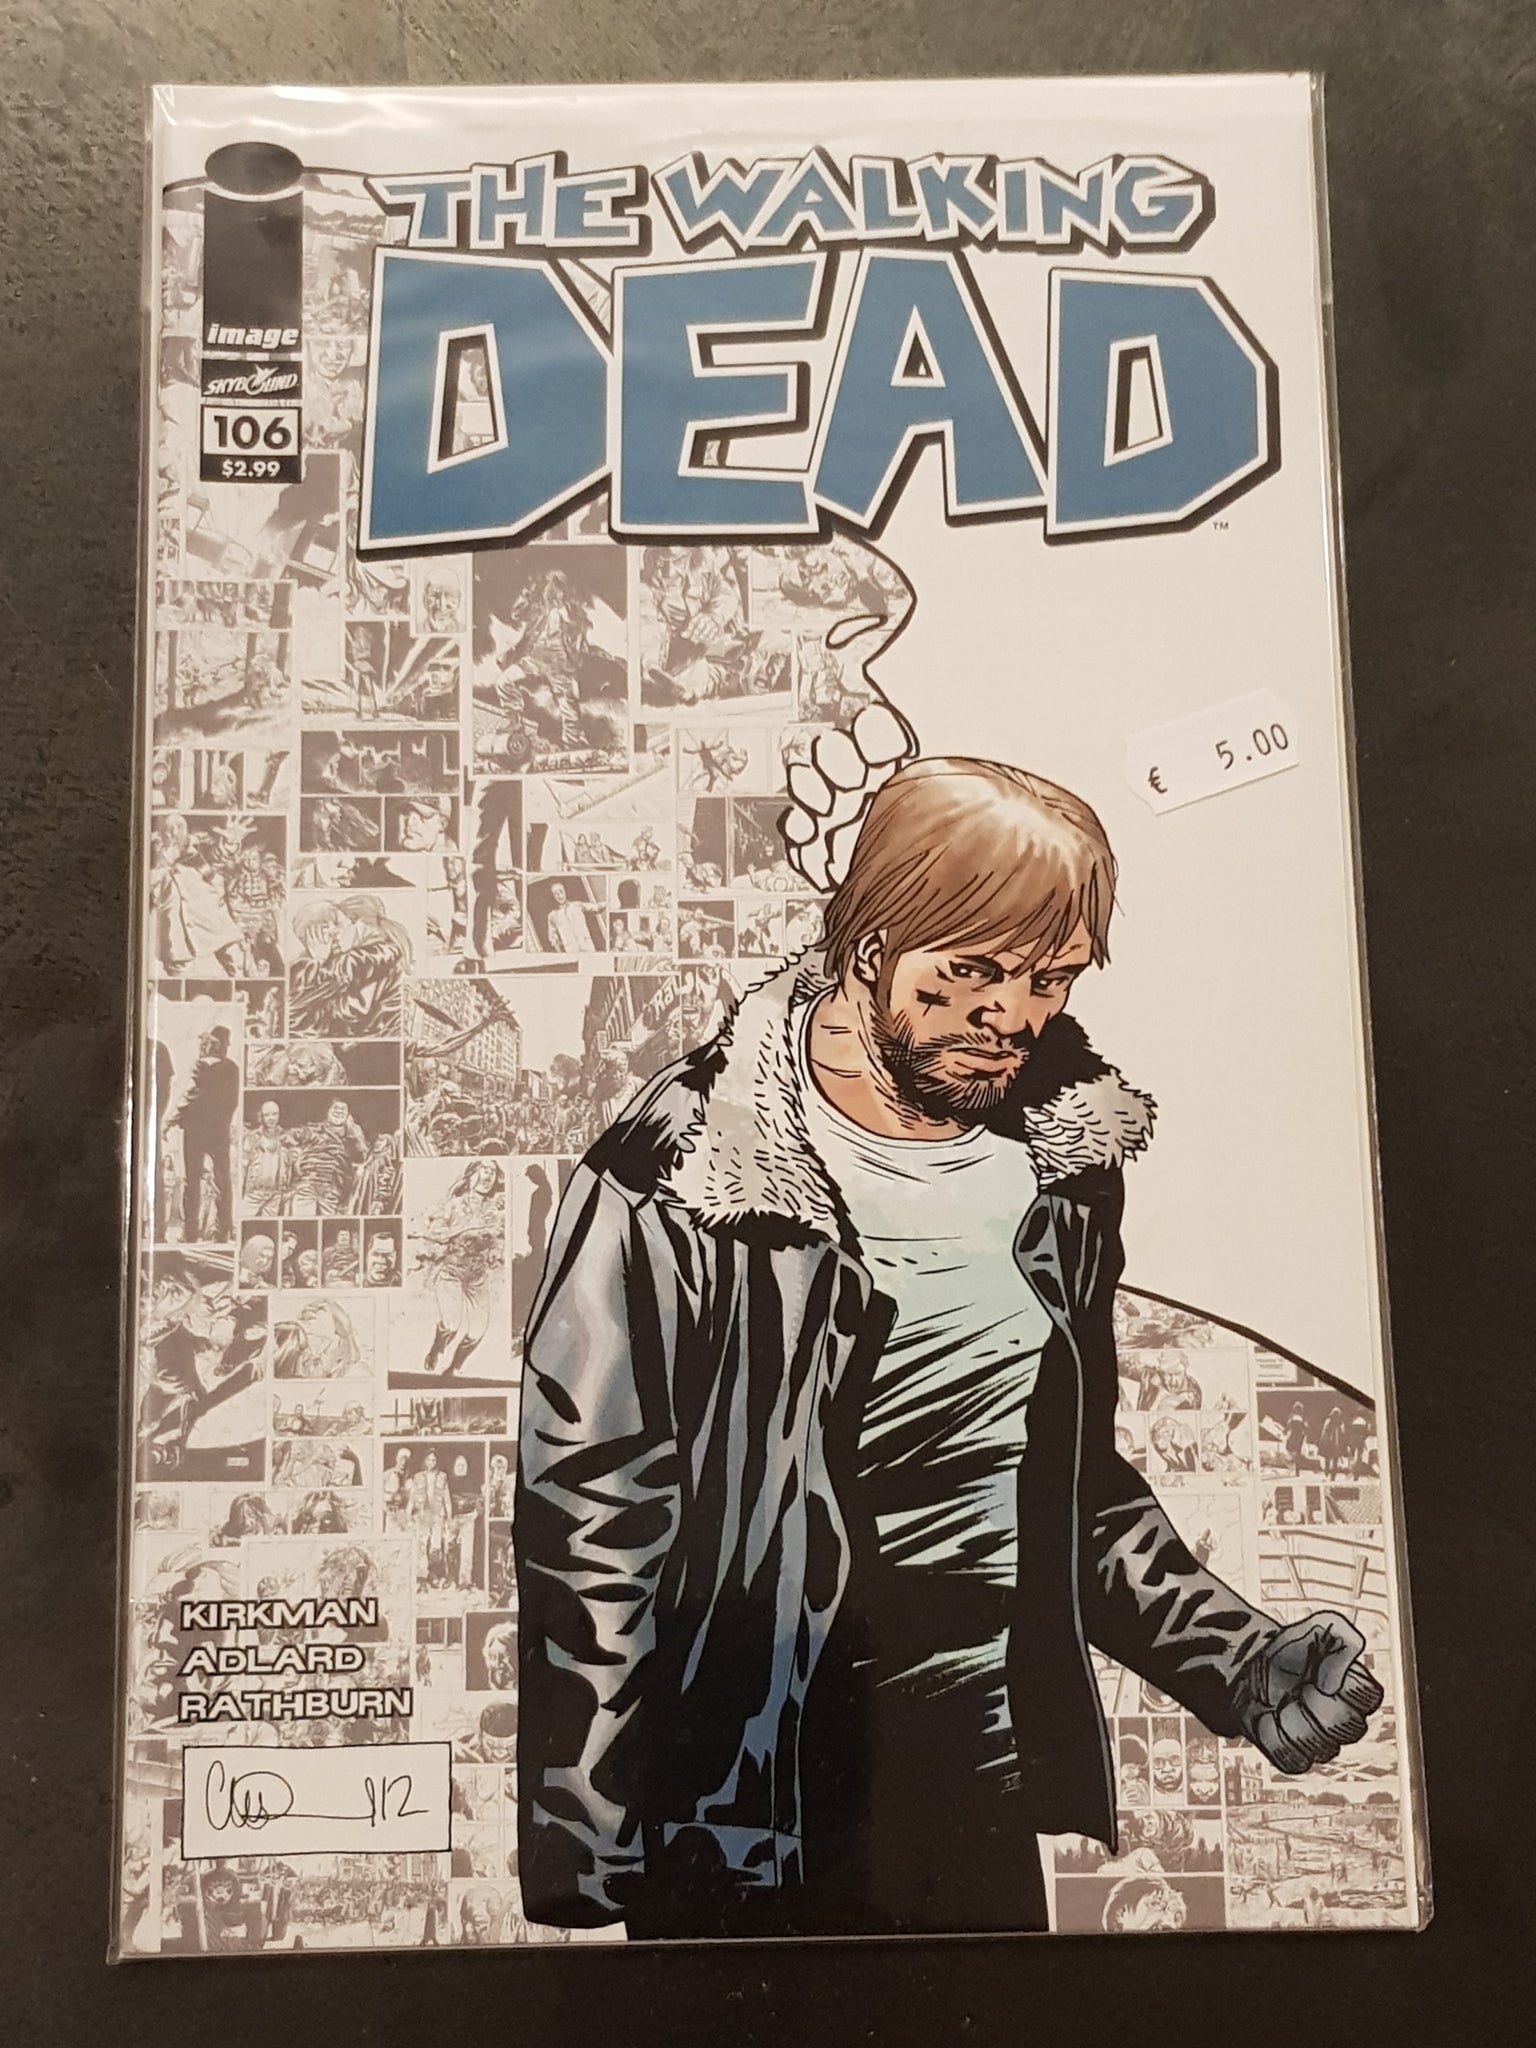 Walking Dead #106 VF/NM (cover B) Variant